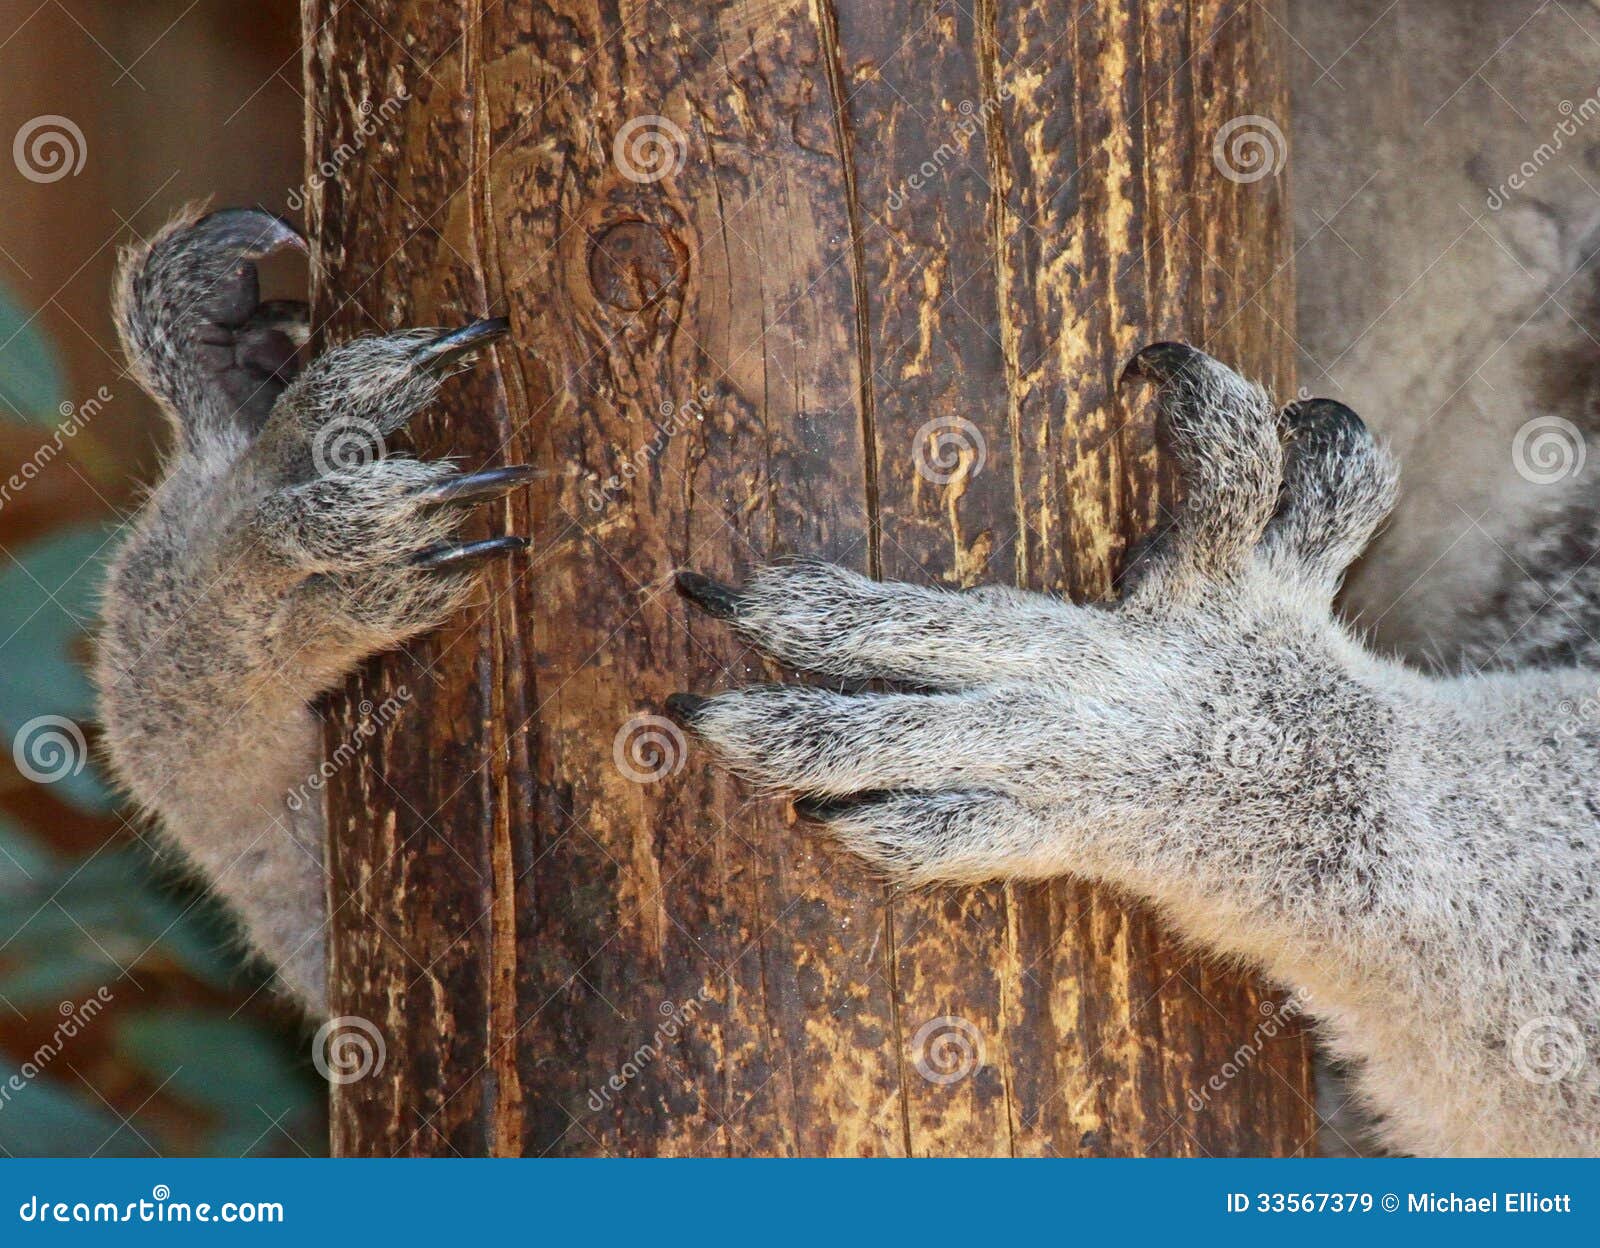 Koala Photos - Free & Stock Photos from Dreamstime